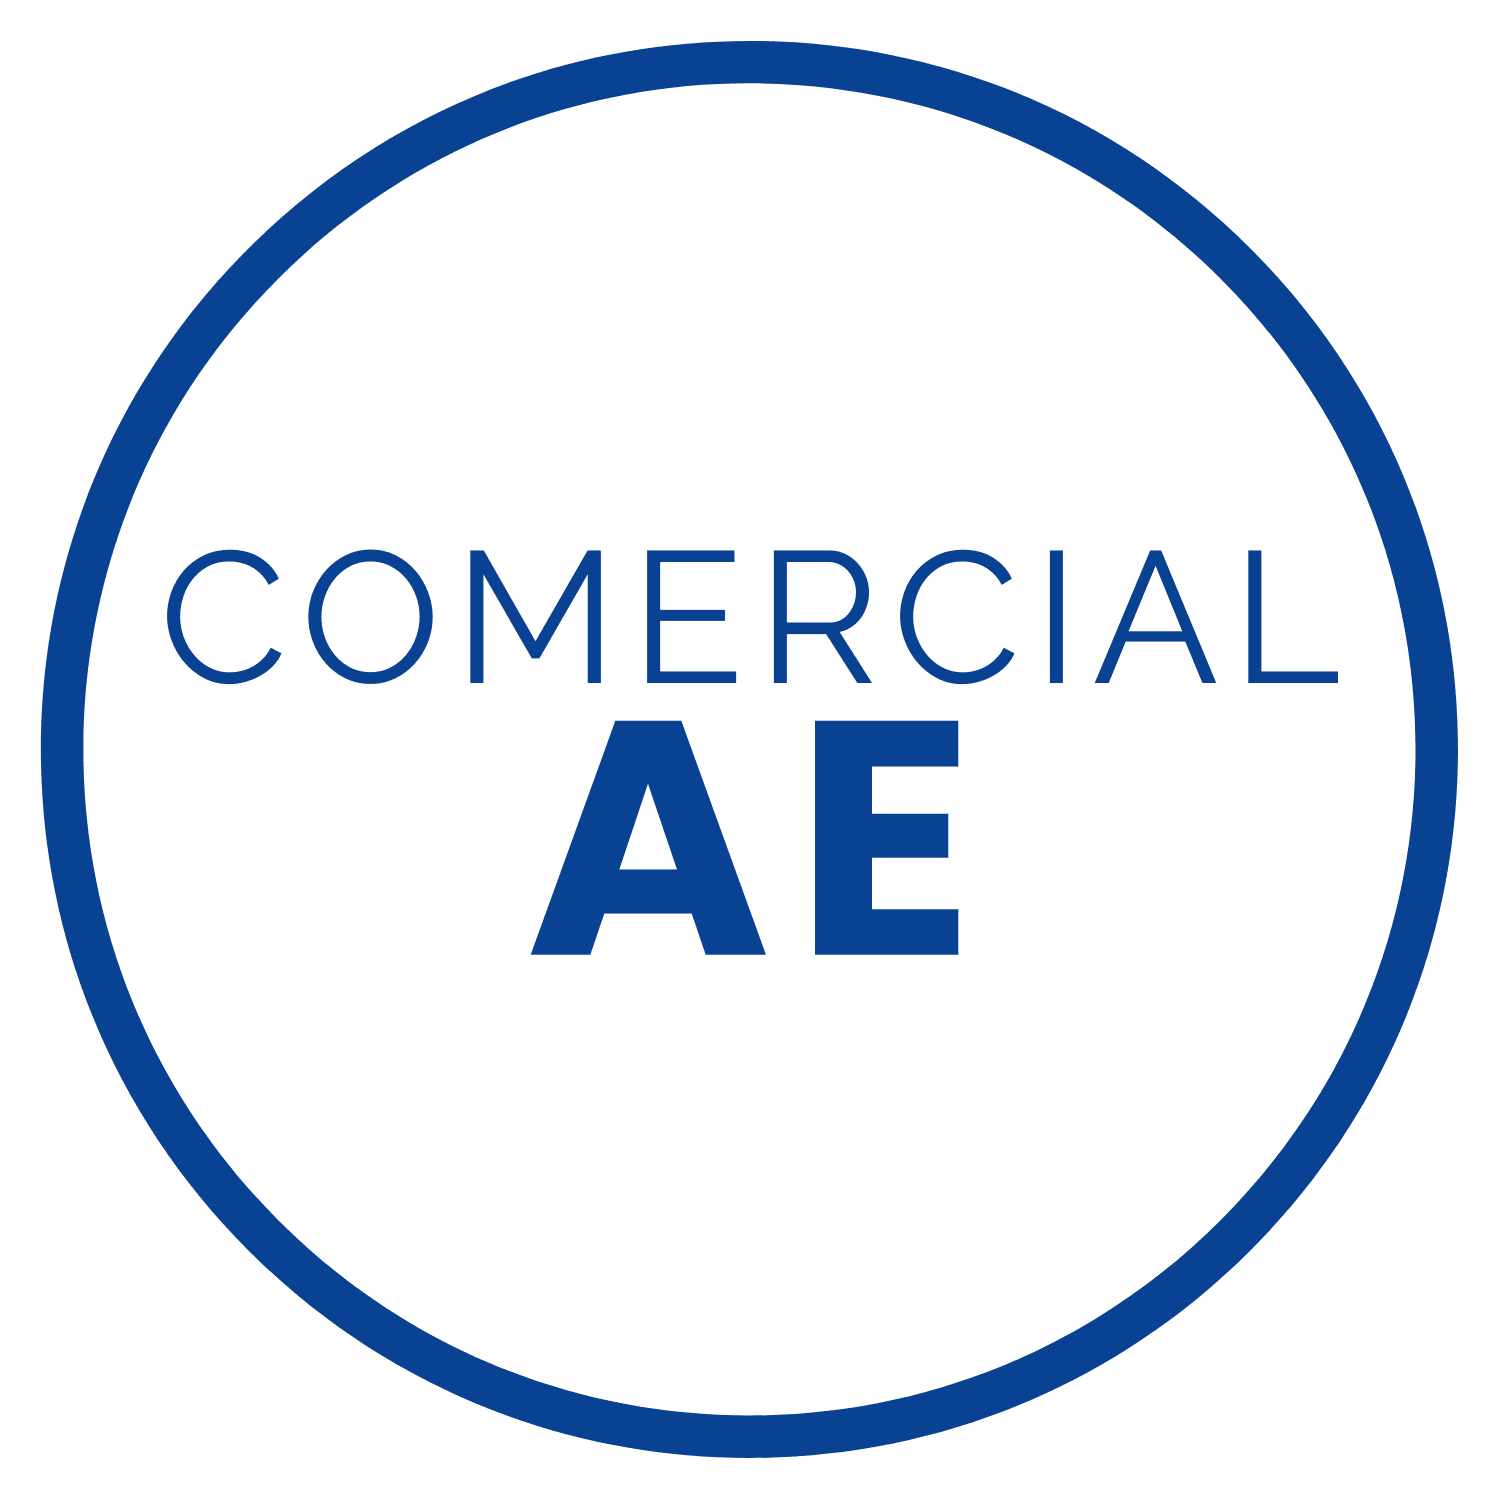 Comercial AE